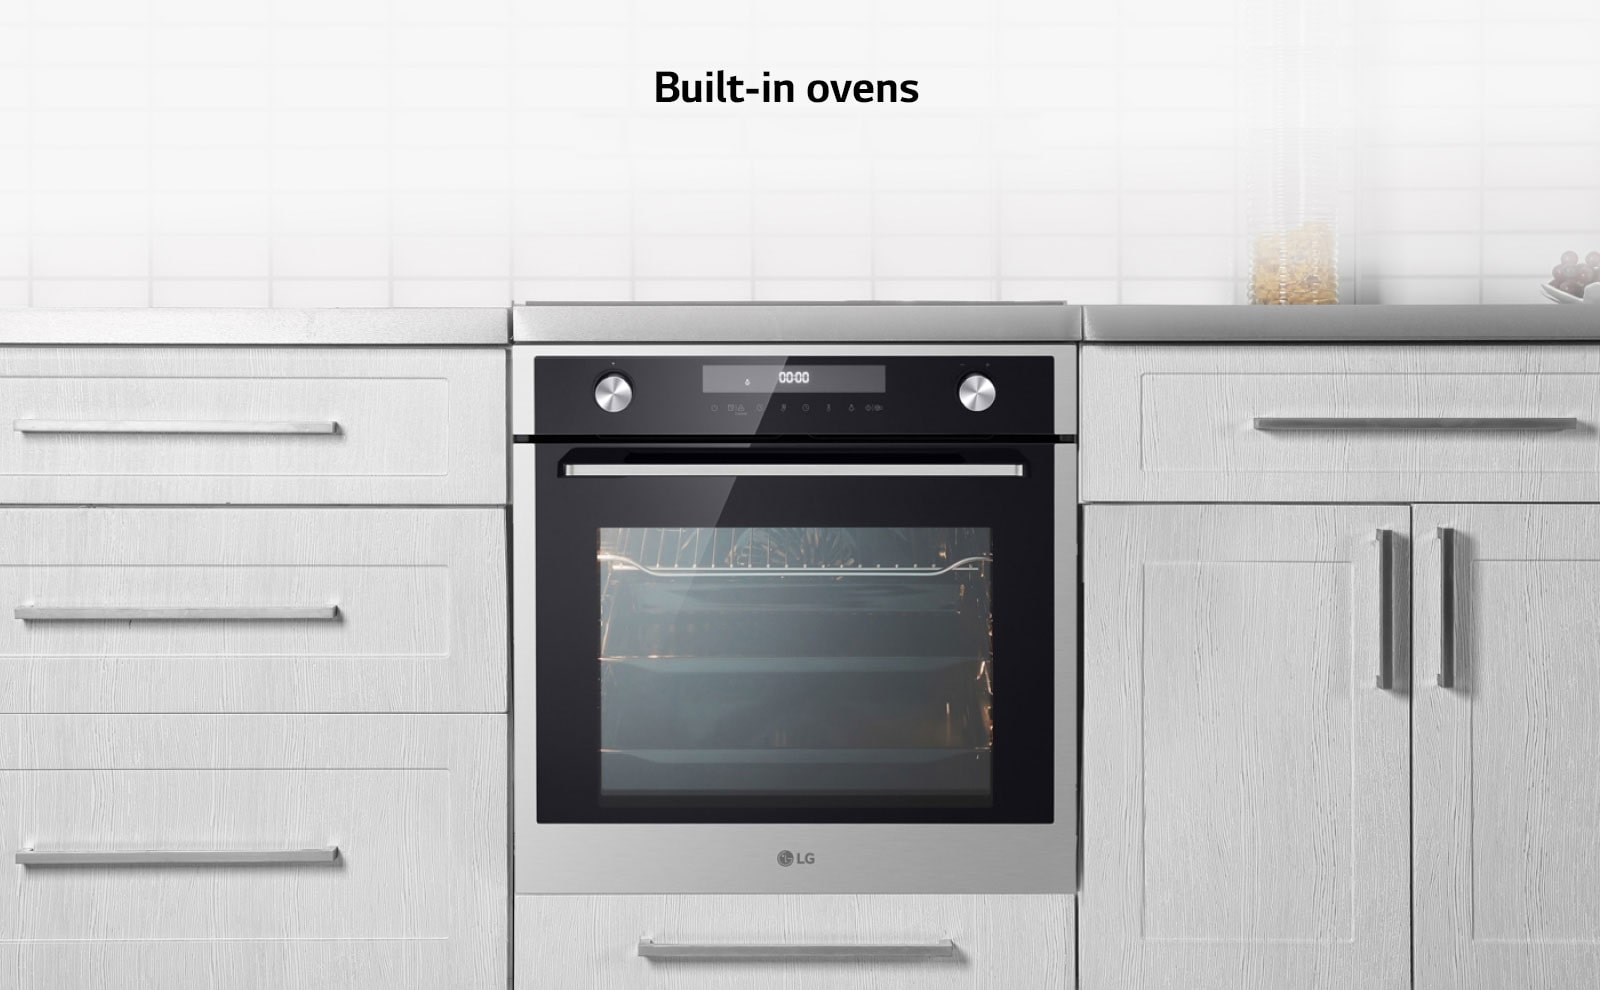 Built-in ovens